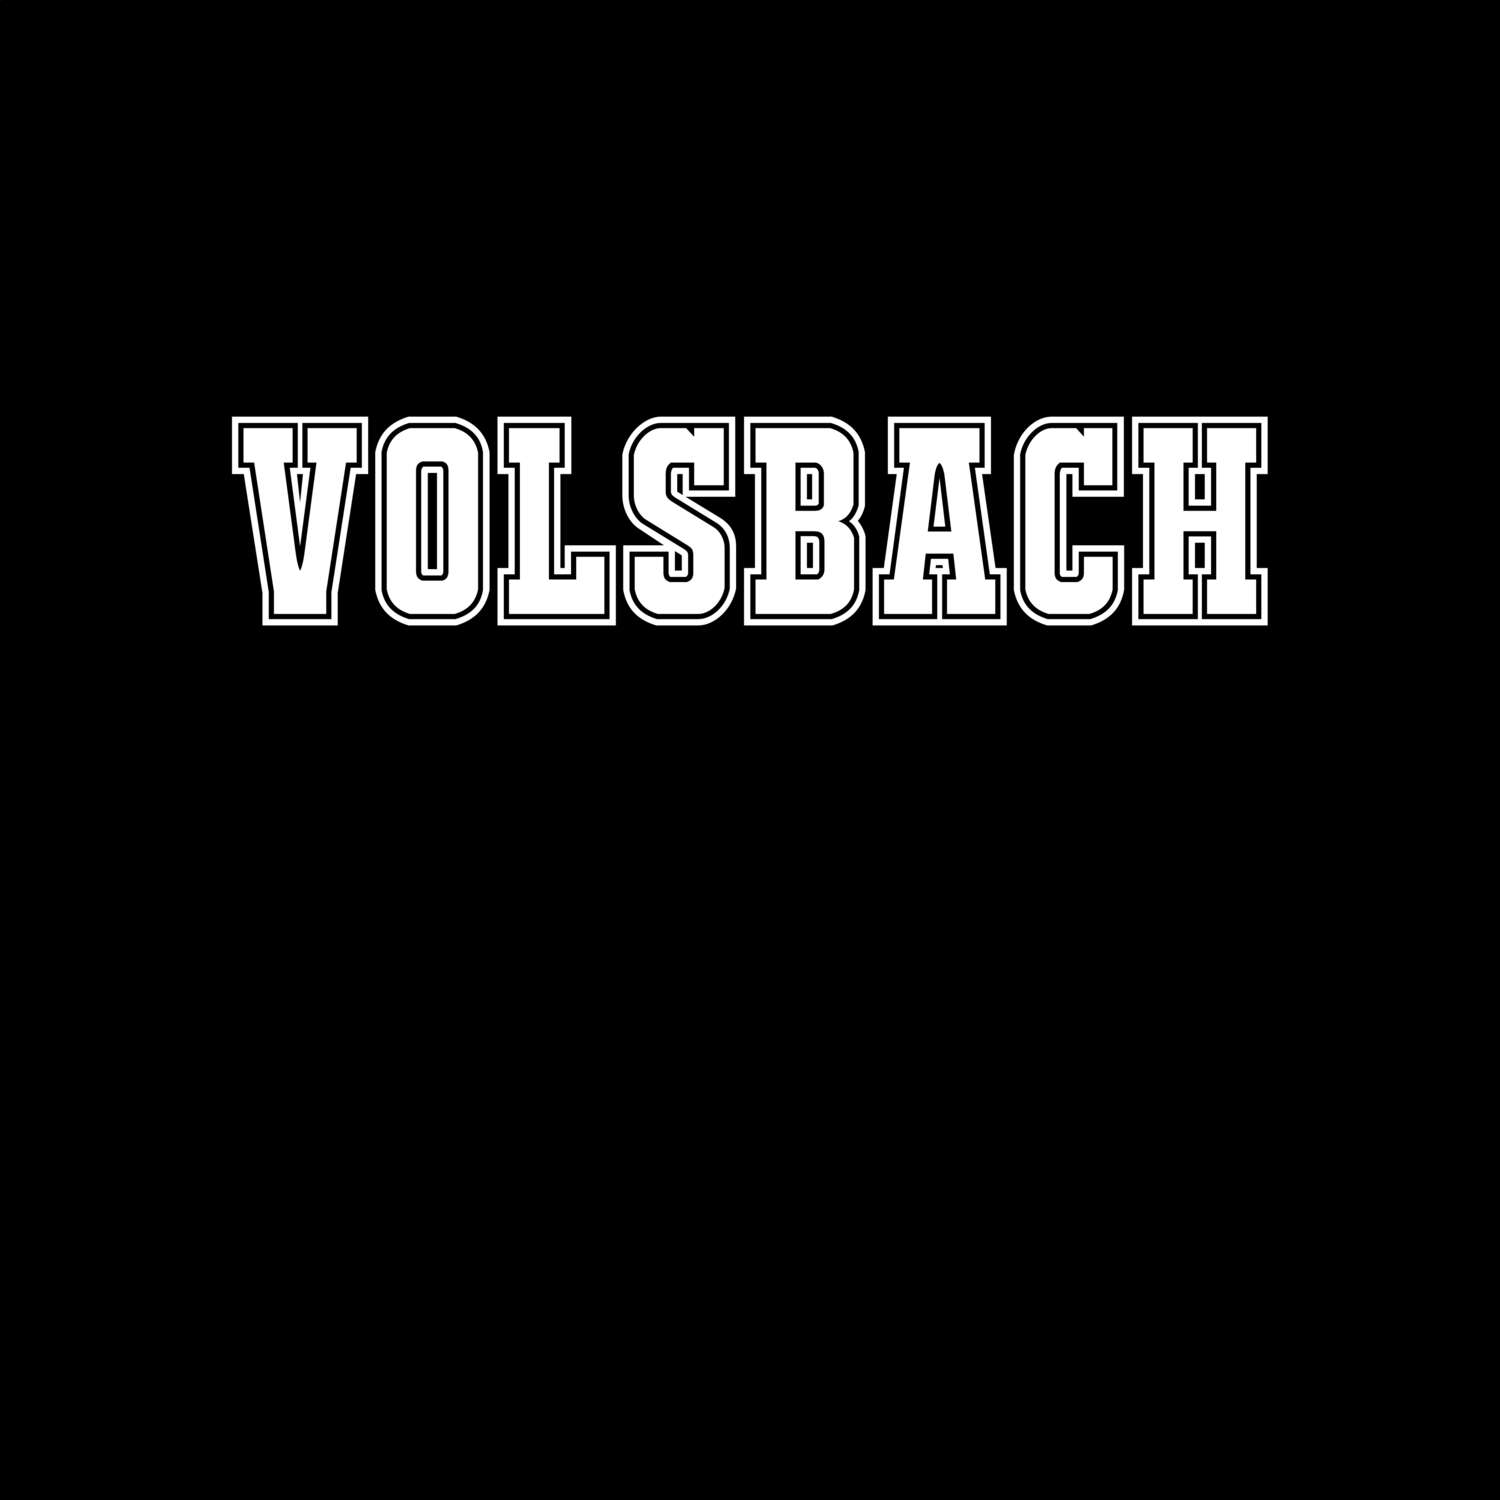 Volsbach T-Shirt »Classic«